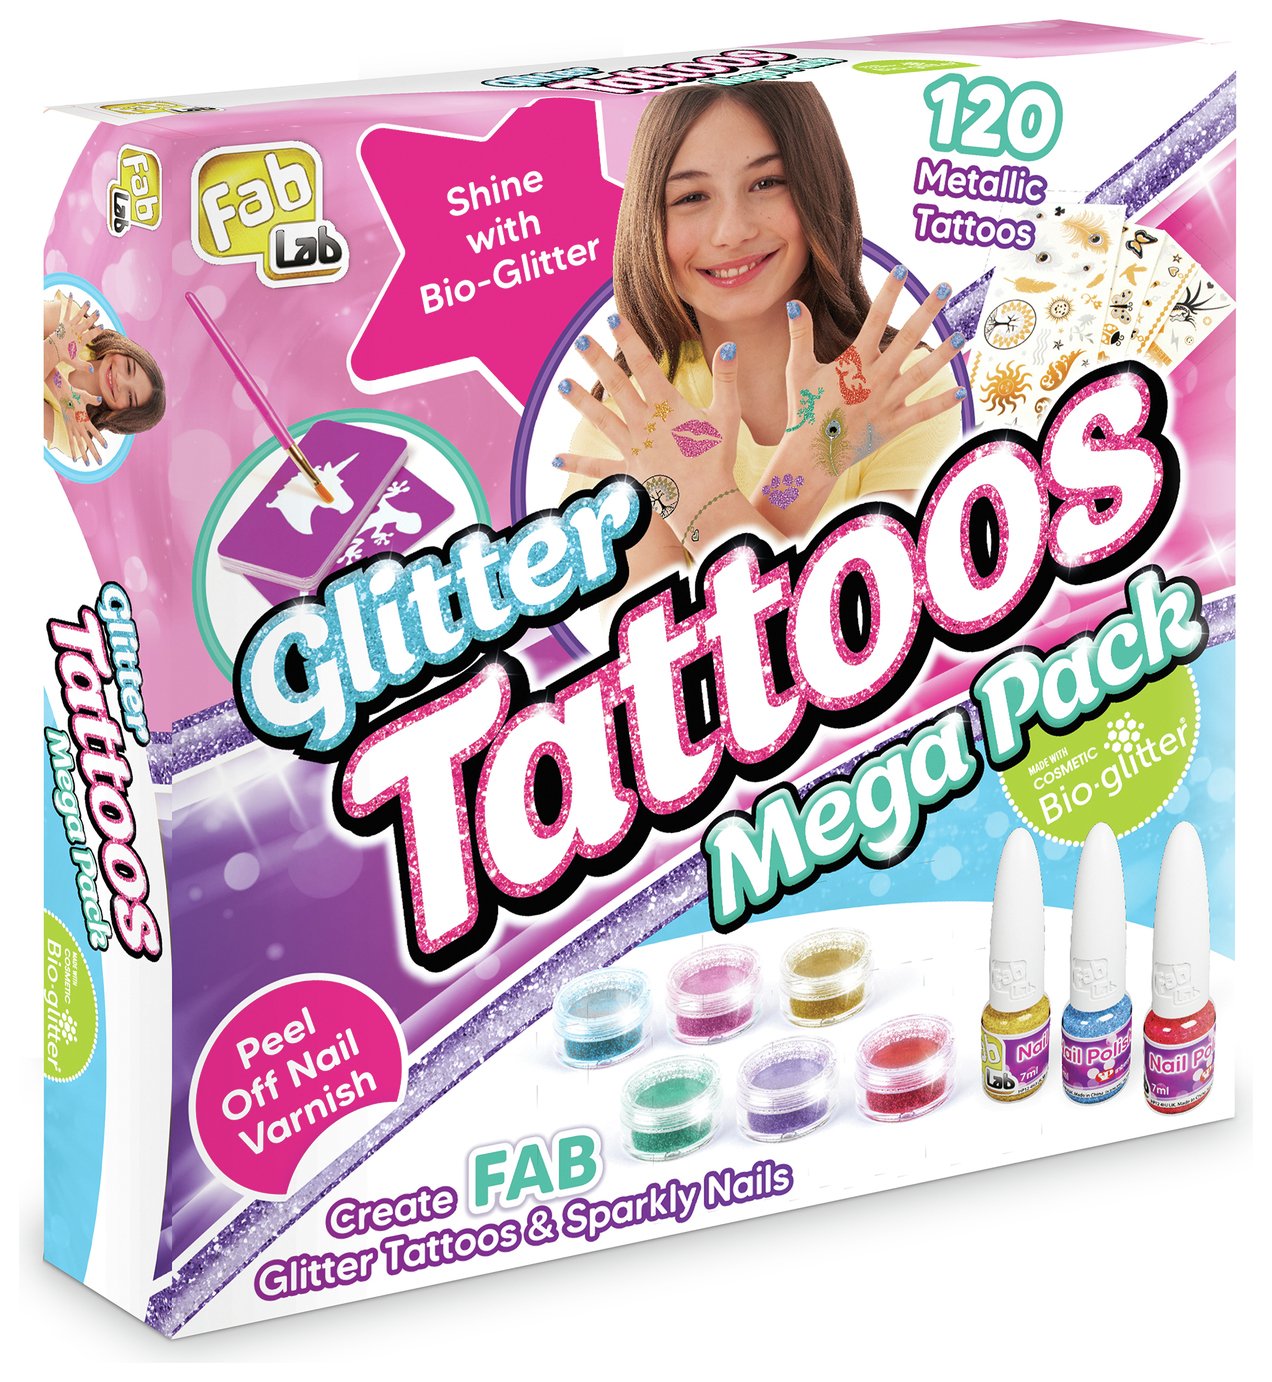 FabLab Glitter Tattoos and Sparkly Nail Polish Megapack